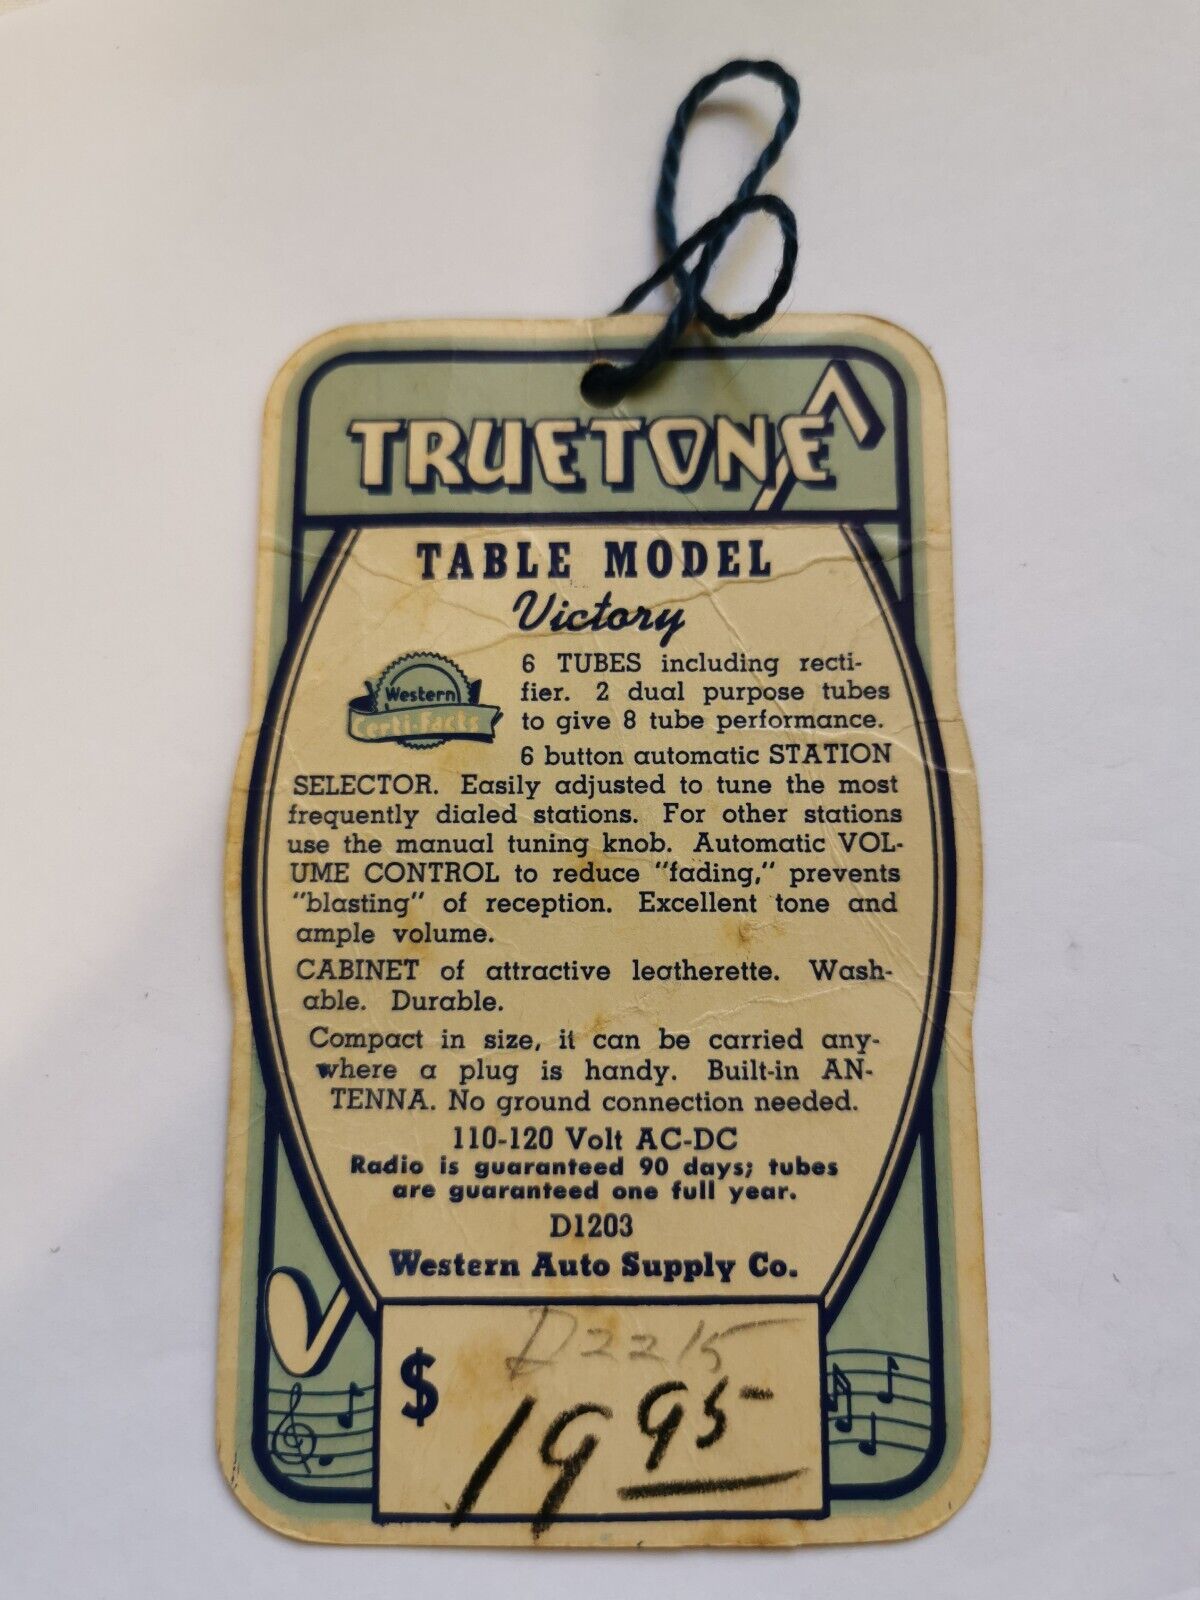 Truetone Tube Radio, Victory Model Store Tag Label